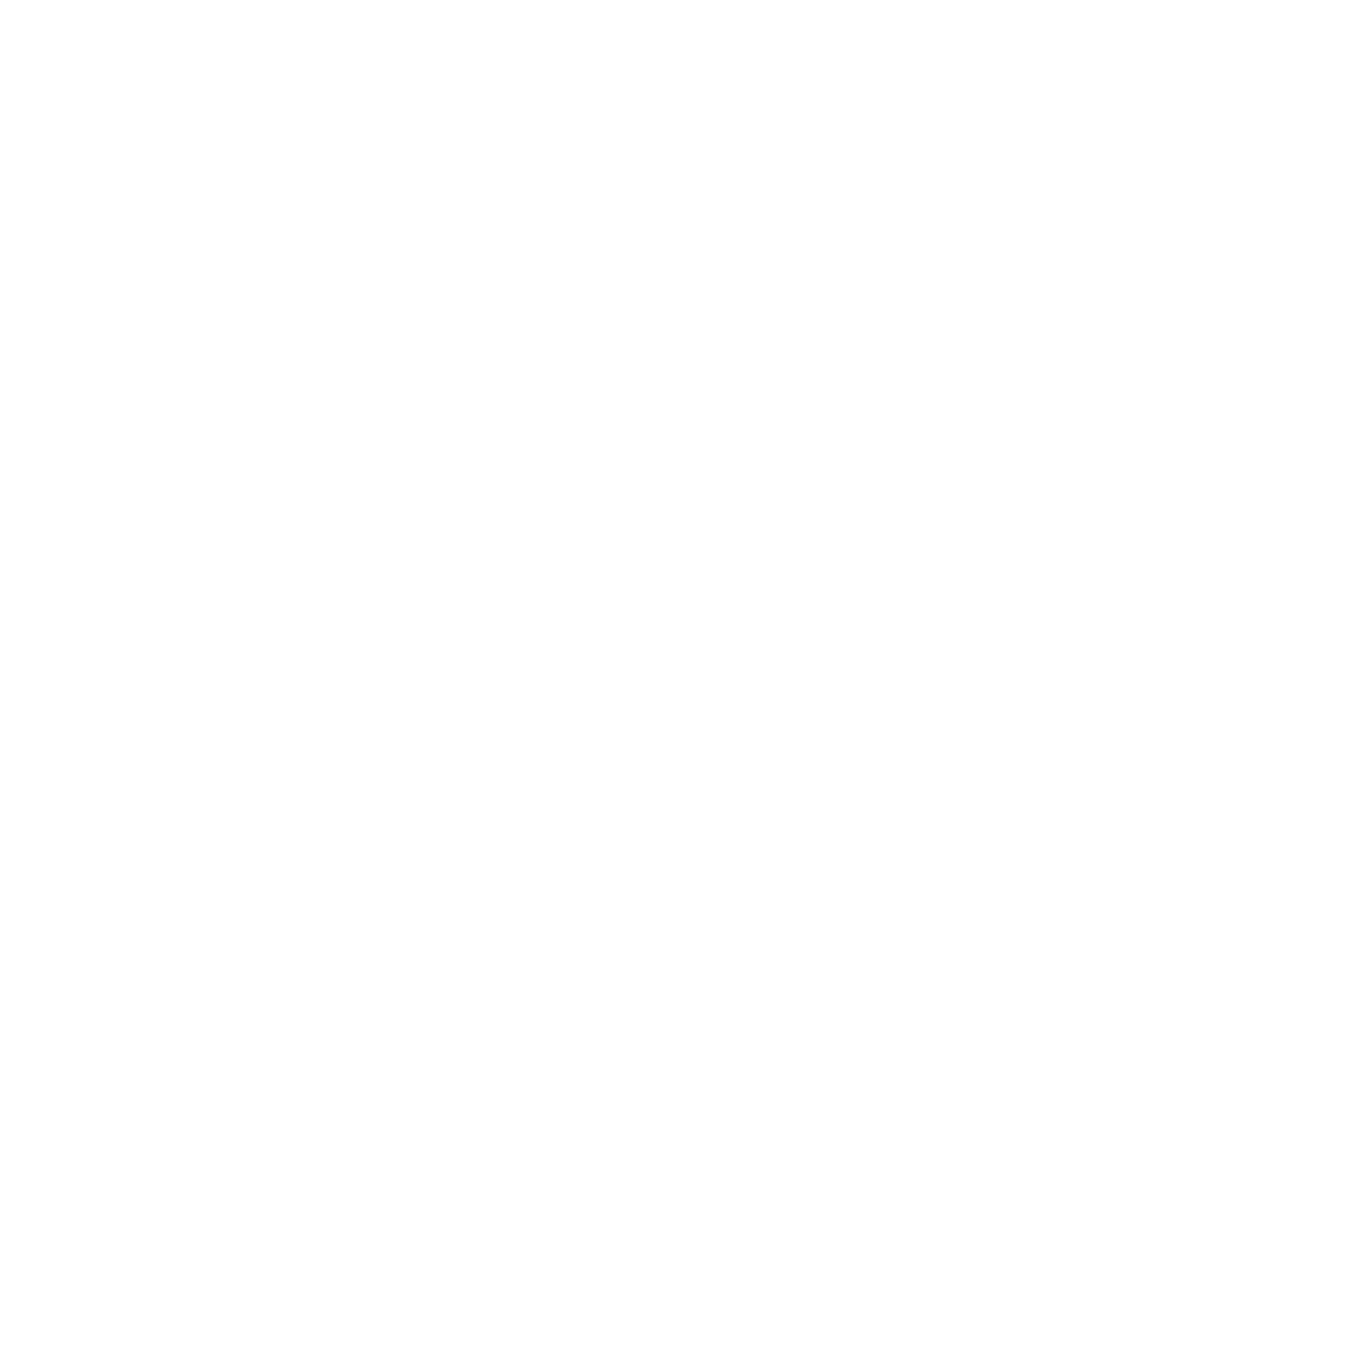 Play Clean Tip Center logo.